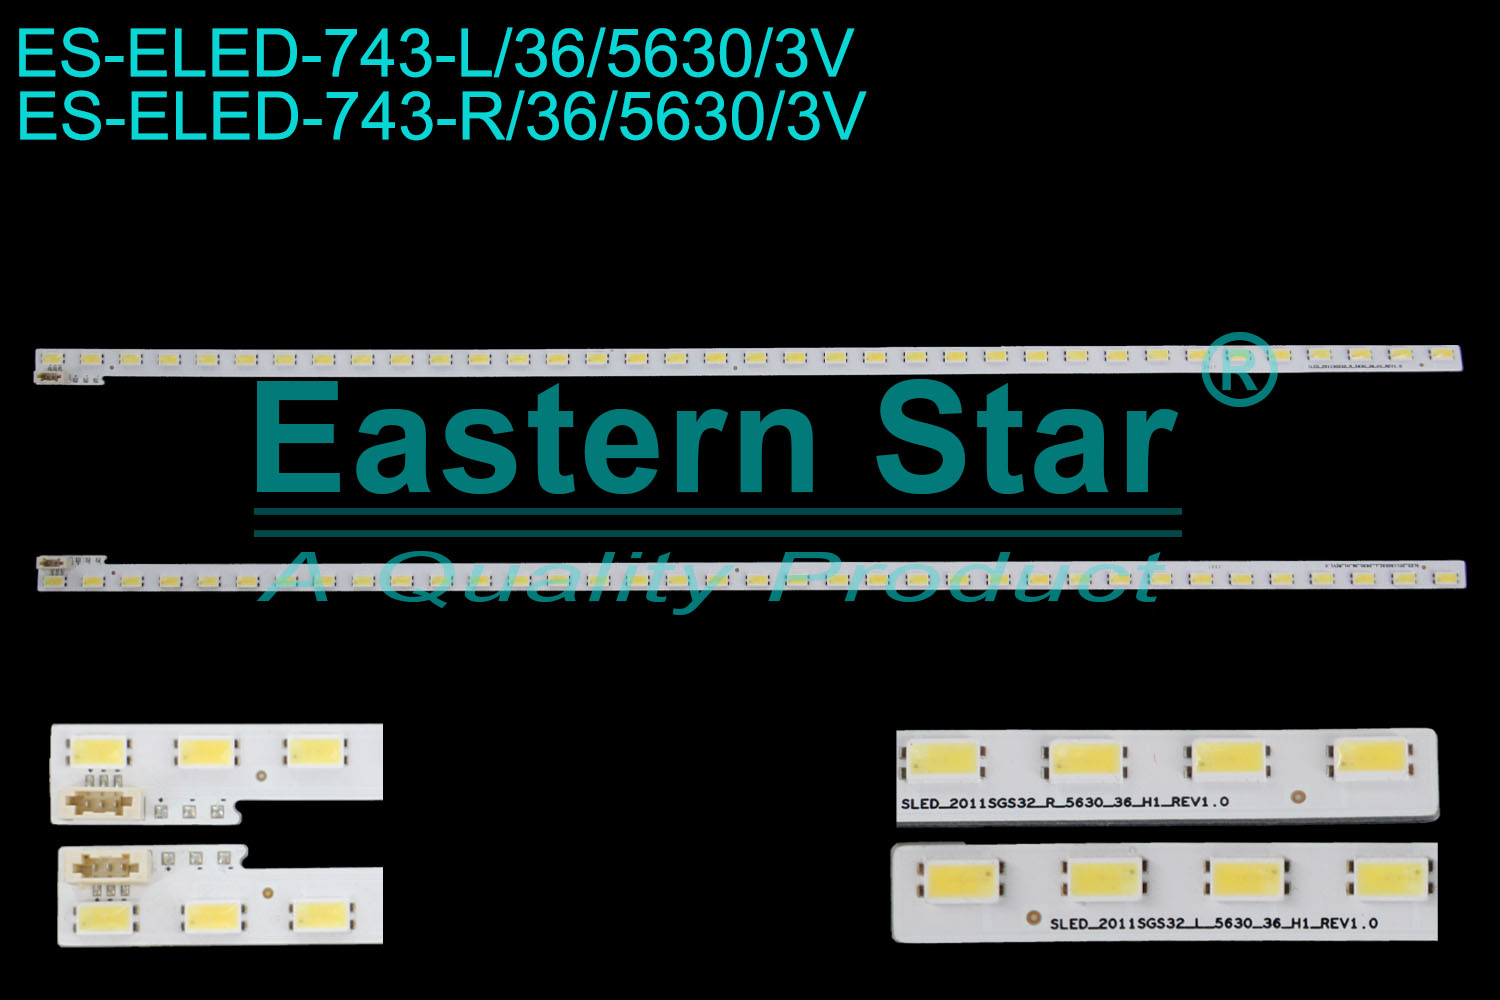 ES-ELED-743 ELED/EDGE TV backlight use for 32'' Toshiba 32TL963|32SL980 L: 1286 SLED_2011SGS32_L_5630_36_H1_REV1.0 2B07  R: 1203 SLED_2011SGS32_R_5630_36_H1_REV1.0 LJ64-03204A LED STRIPS(2)